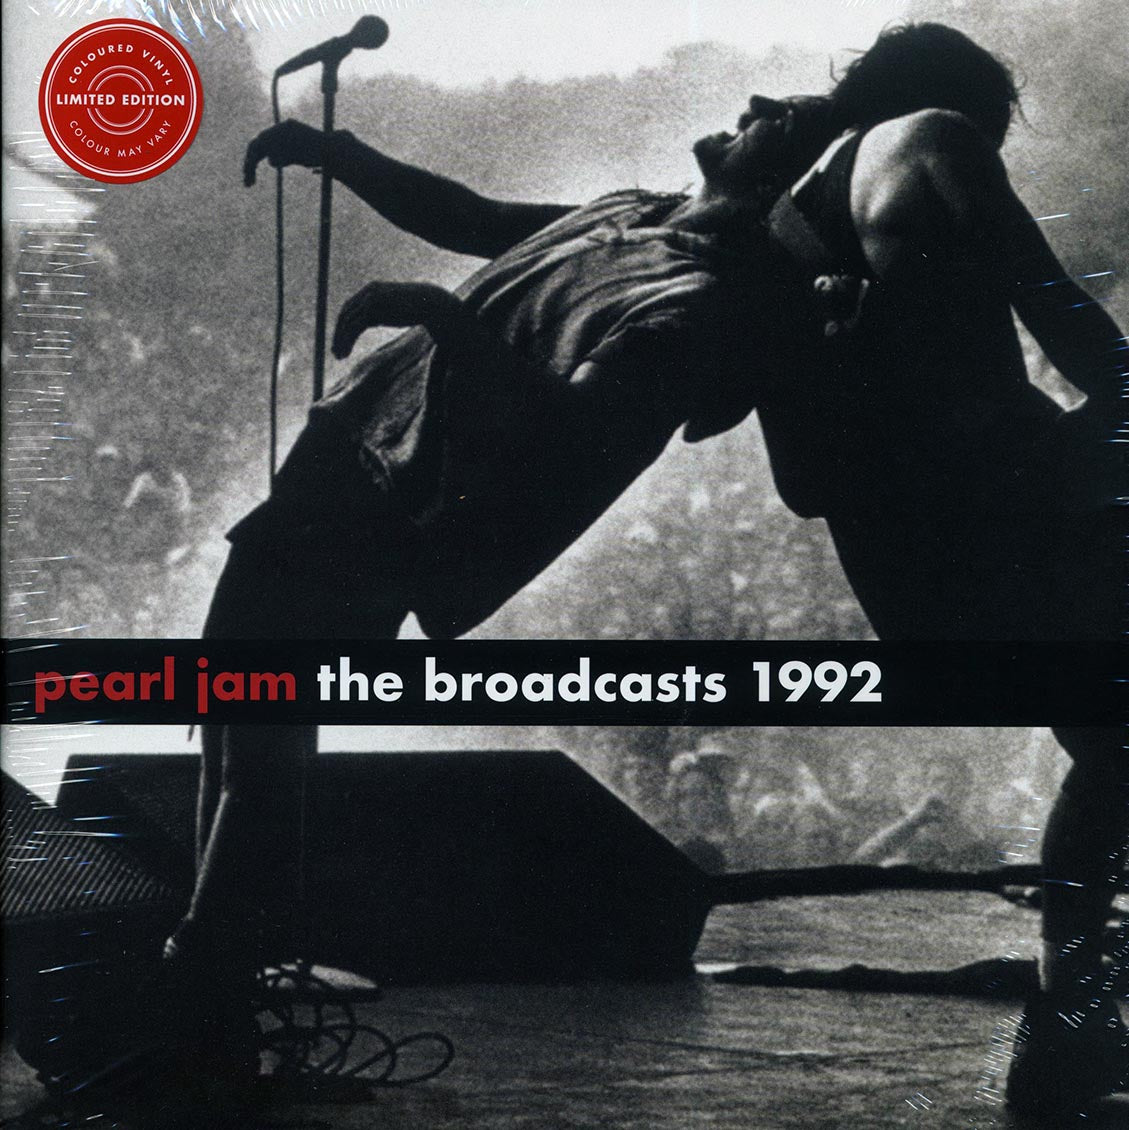 Pearl Jam - The Broadcasts 1992 (ltd. ed.) (2xLP) (red vinyl) - Vinyl LP